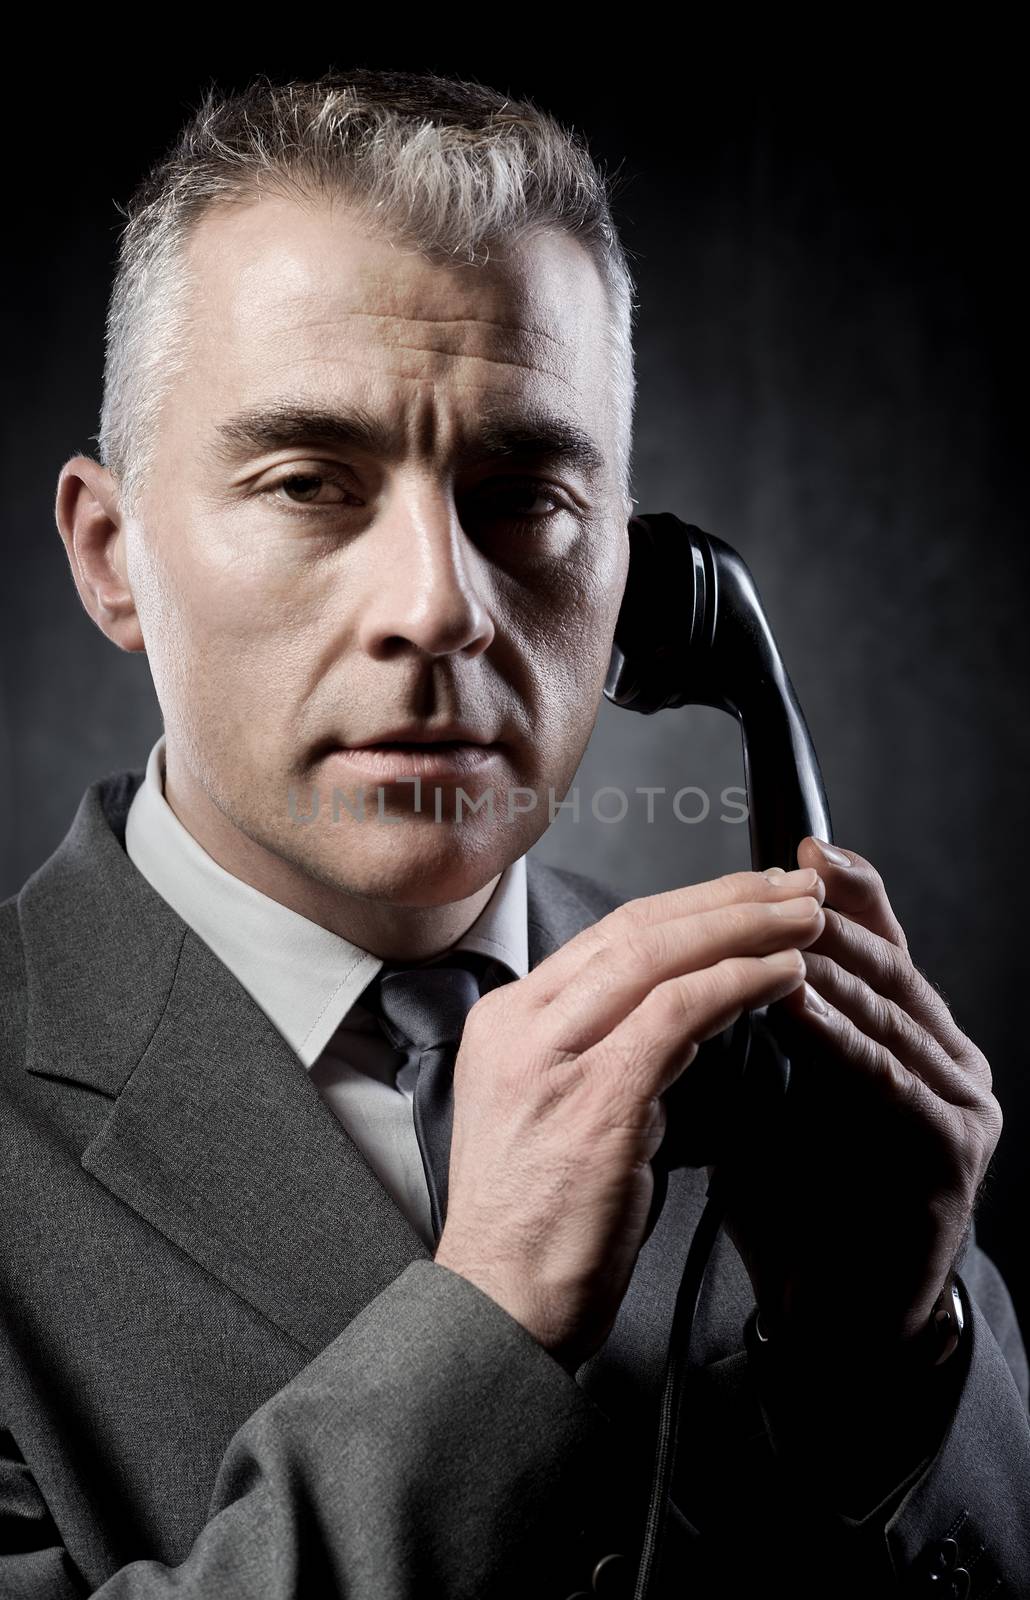 Handsome man holding a vintage phone receiver on dark background.